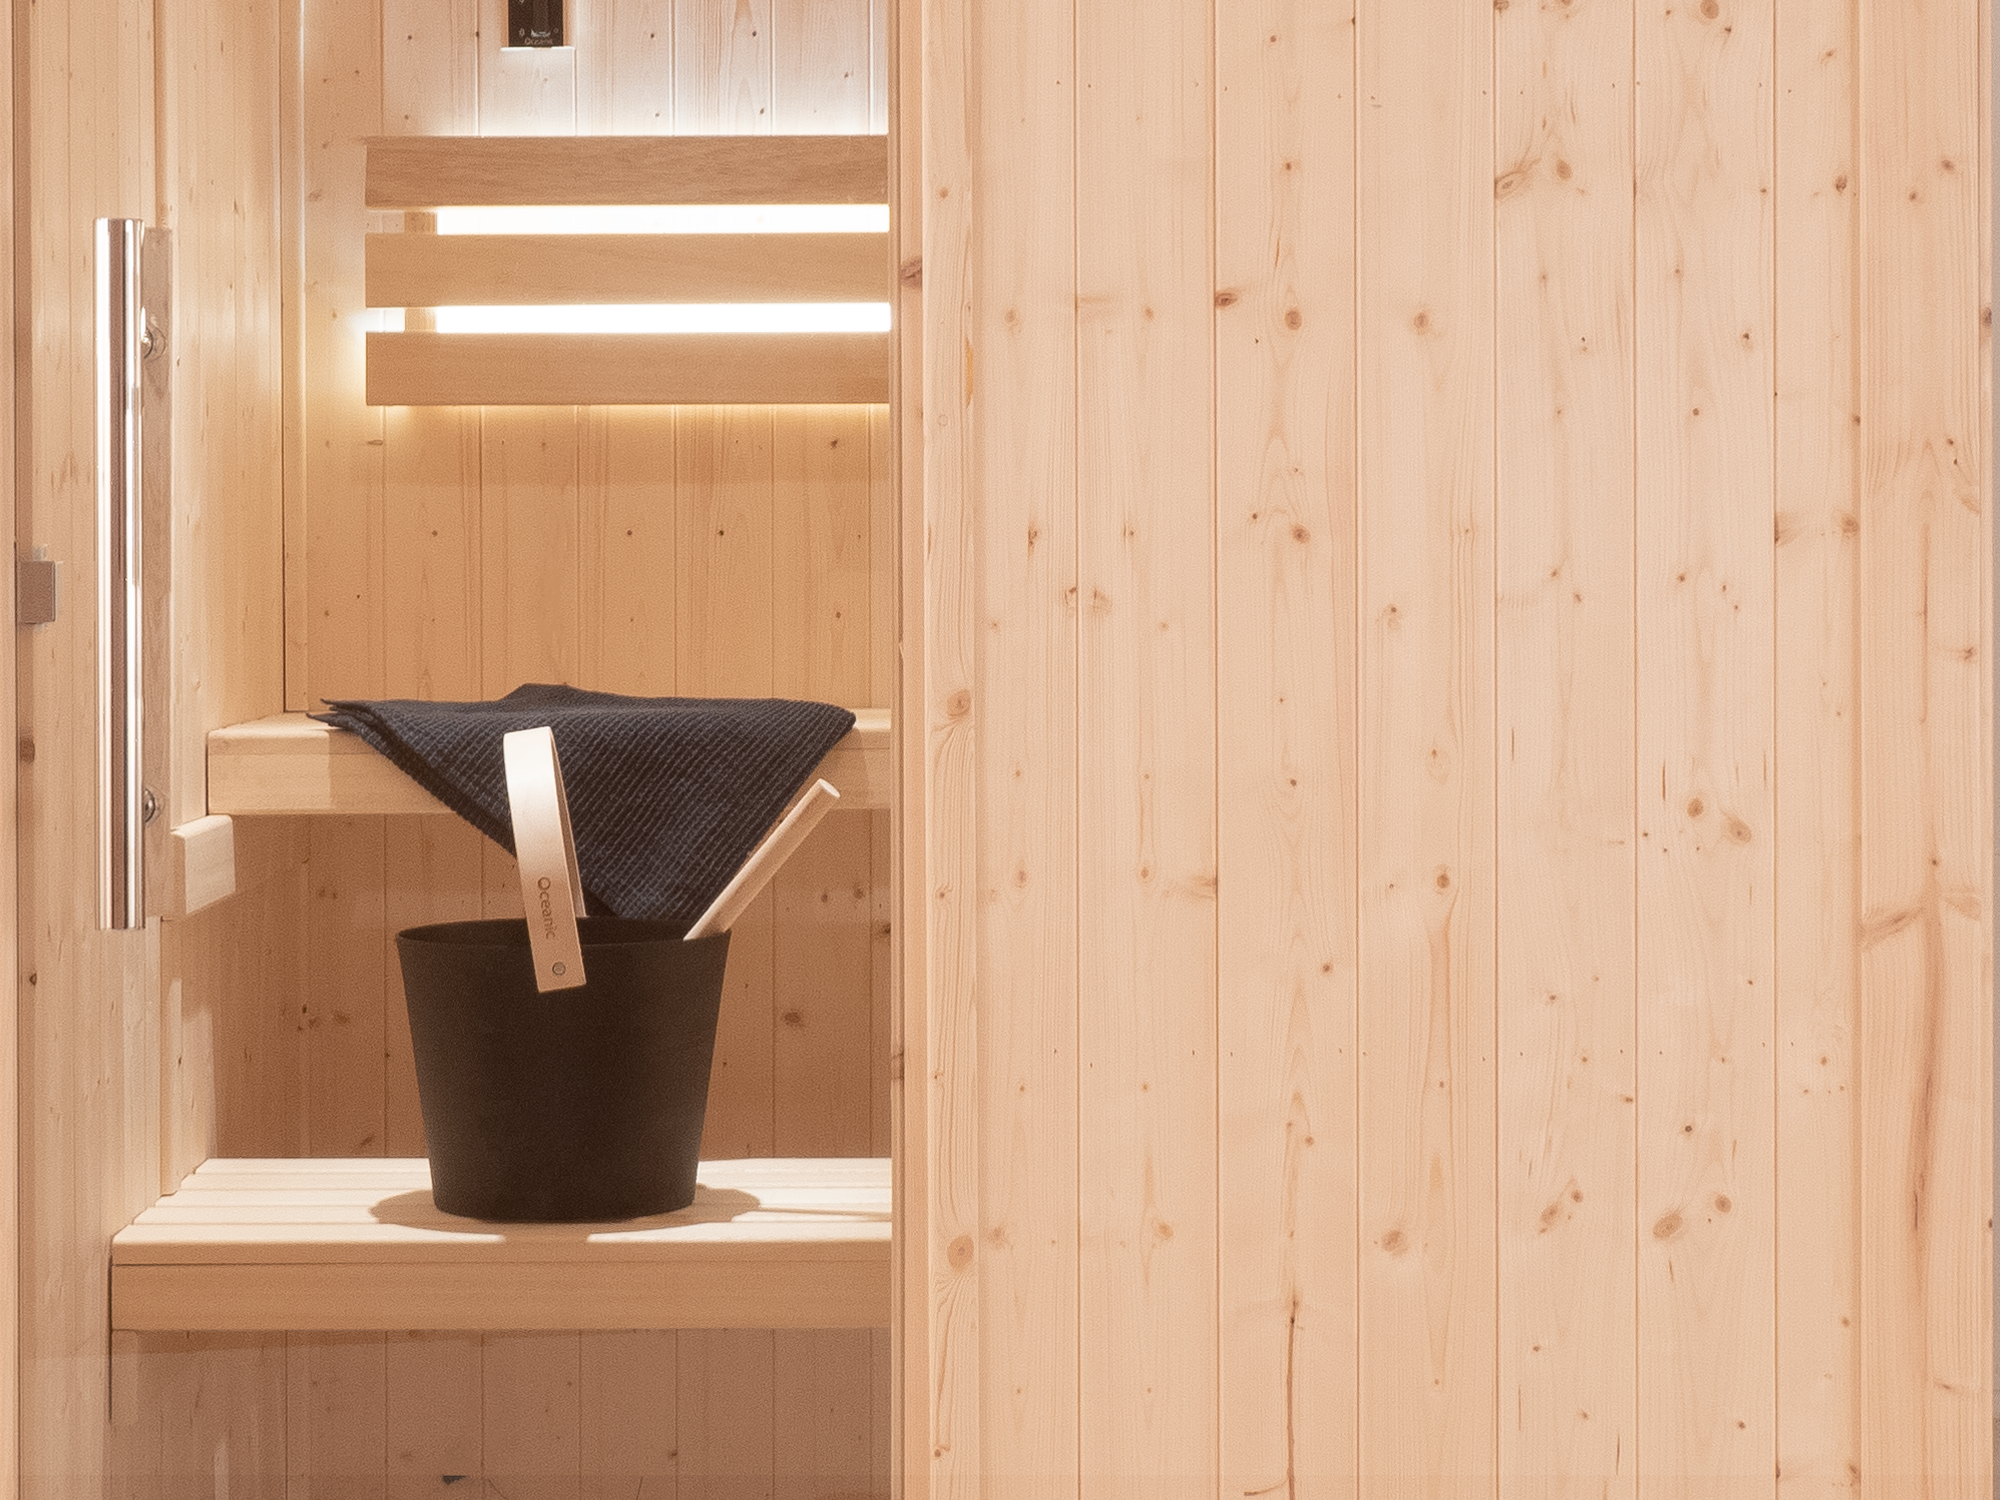 New Range Tradicional Sauna Cabin: Details